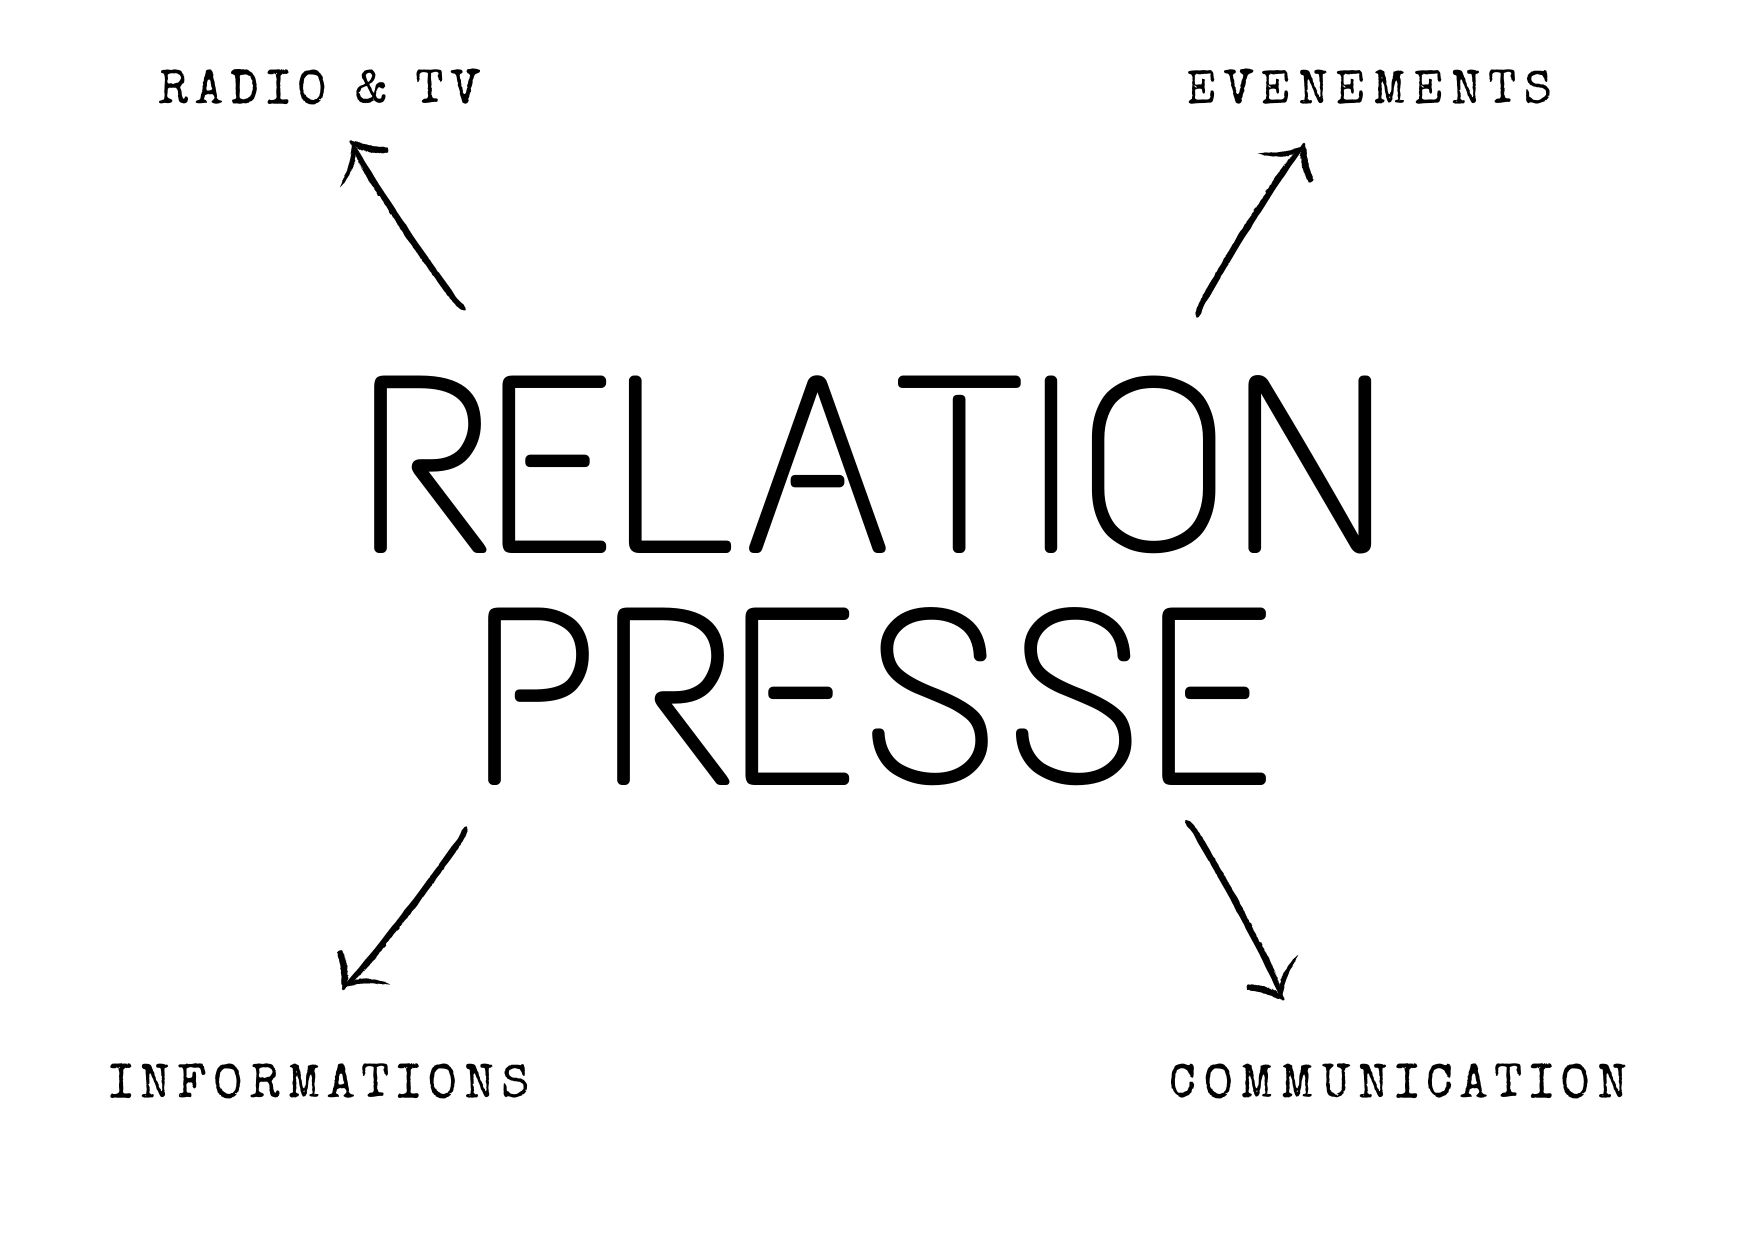 Relation presse